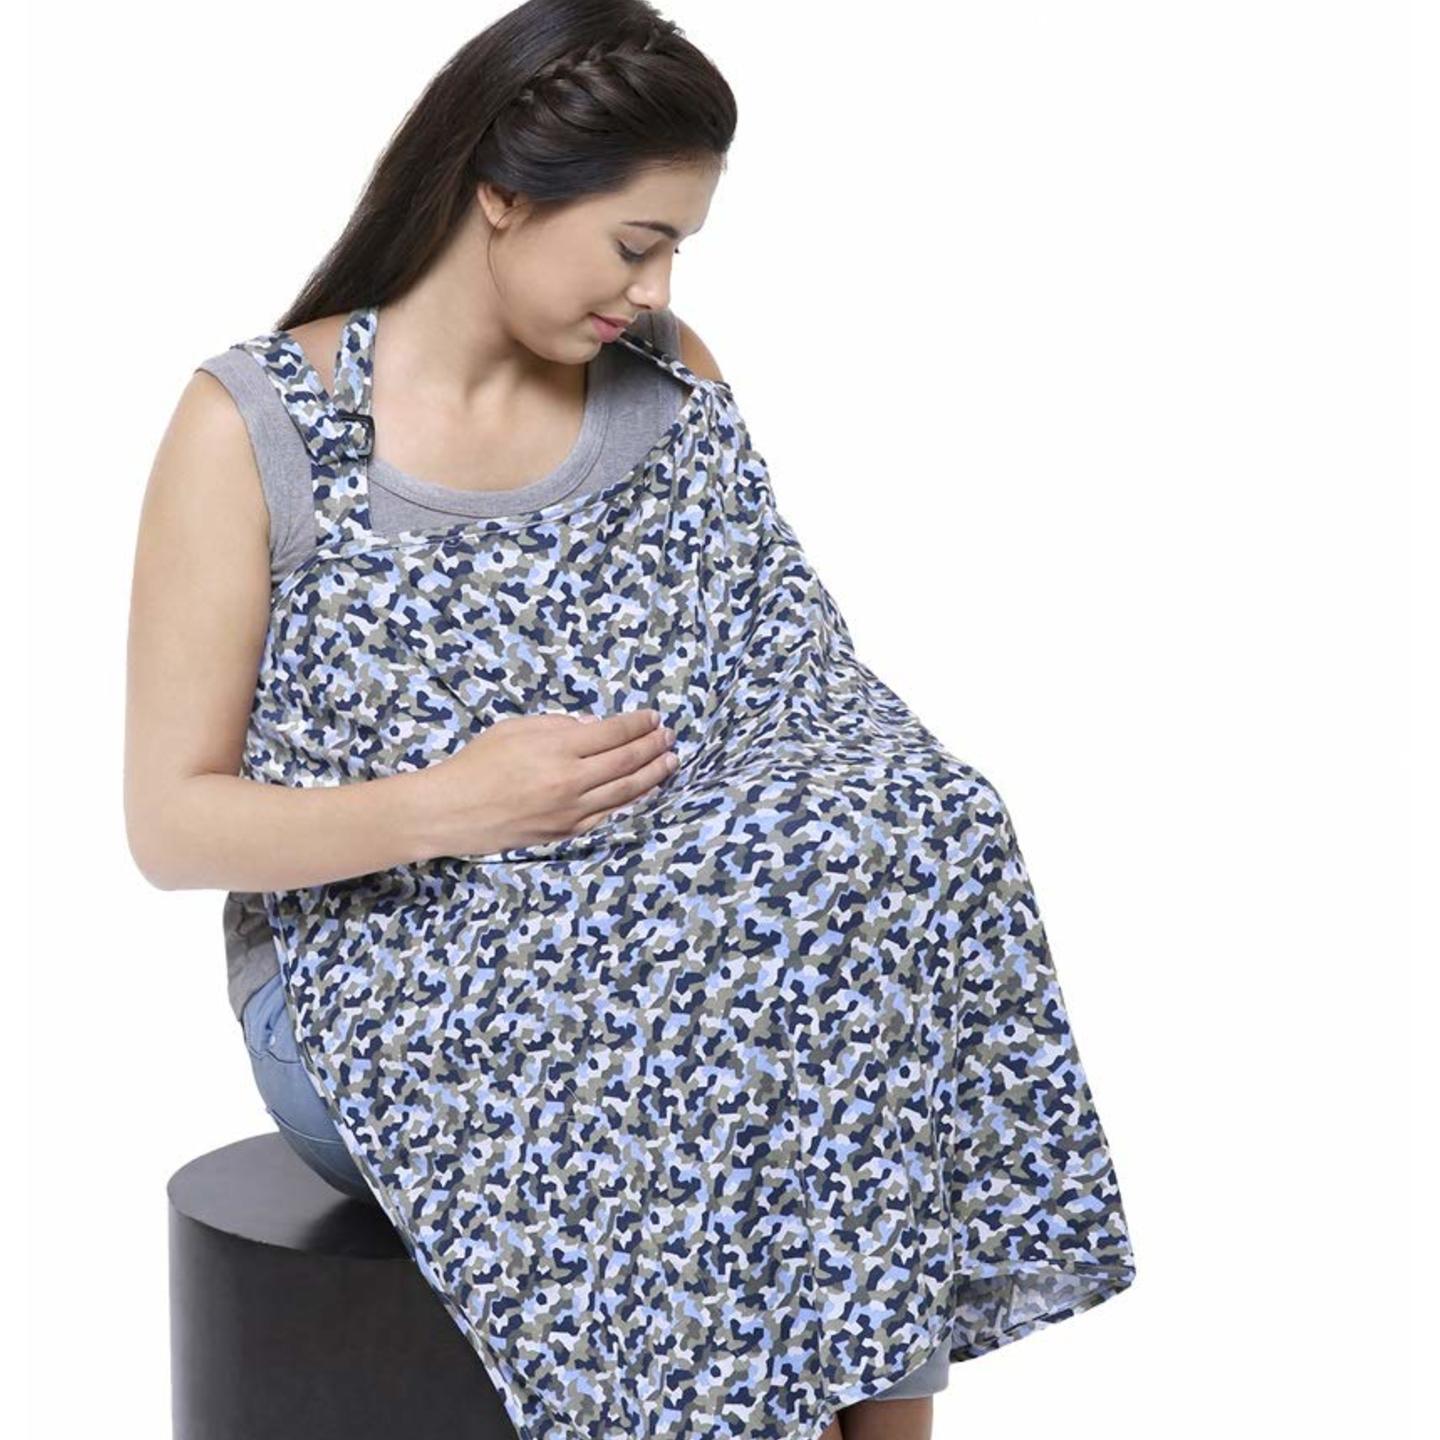 Nursing Cover Feeding Apron Cloak for breast feeding mothers